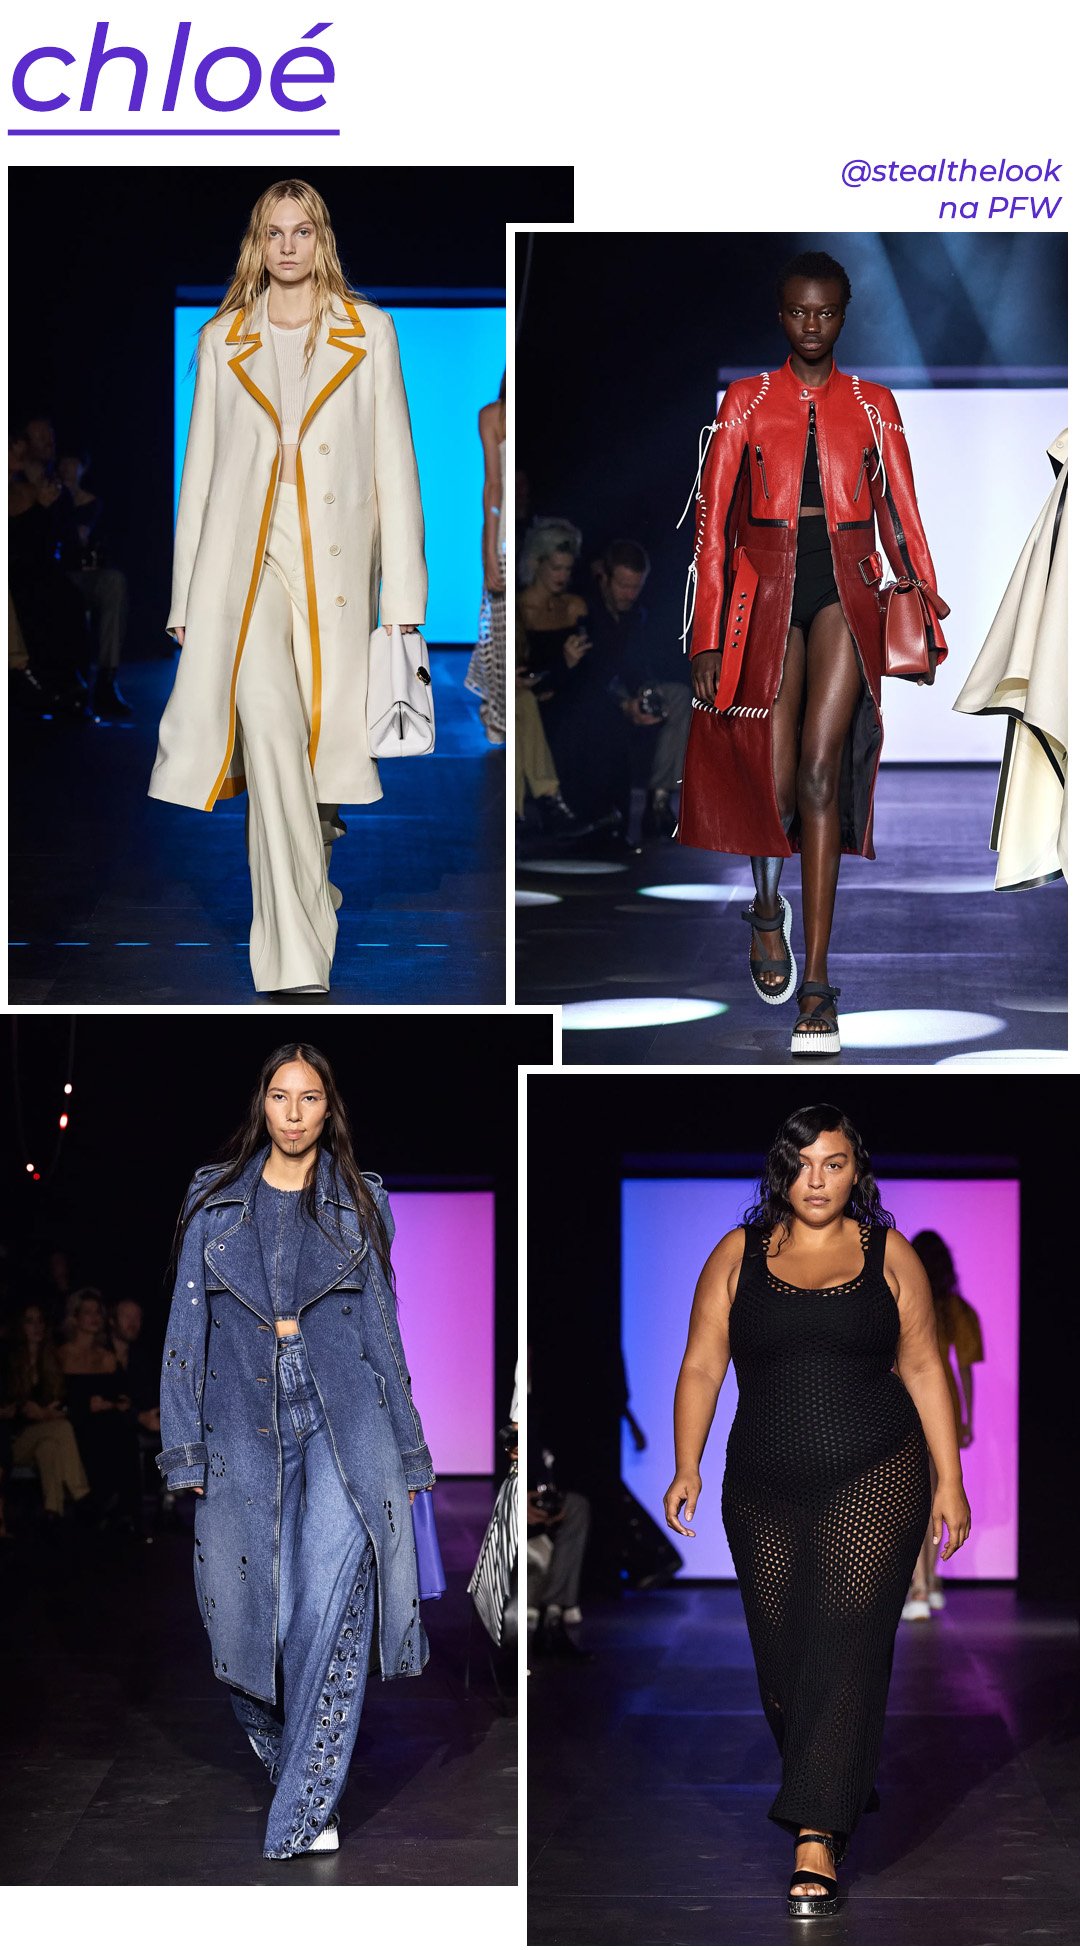 Chloé S/S 2023 - roupas diversas - Paris Fashion Week - Primavera - modelo andando pela passarela - https://stealthelook.com.br